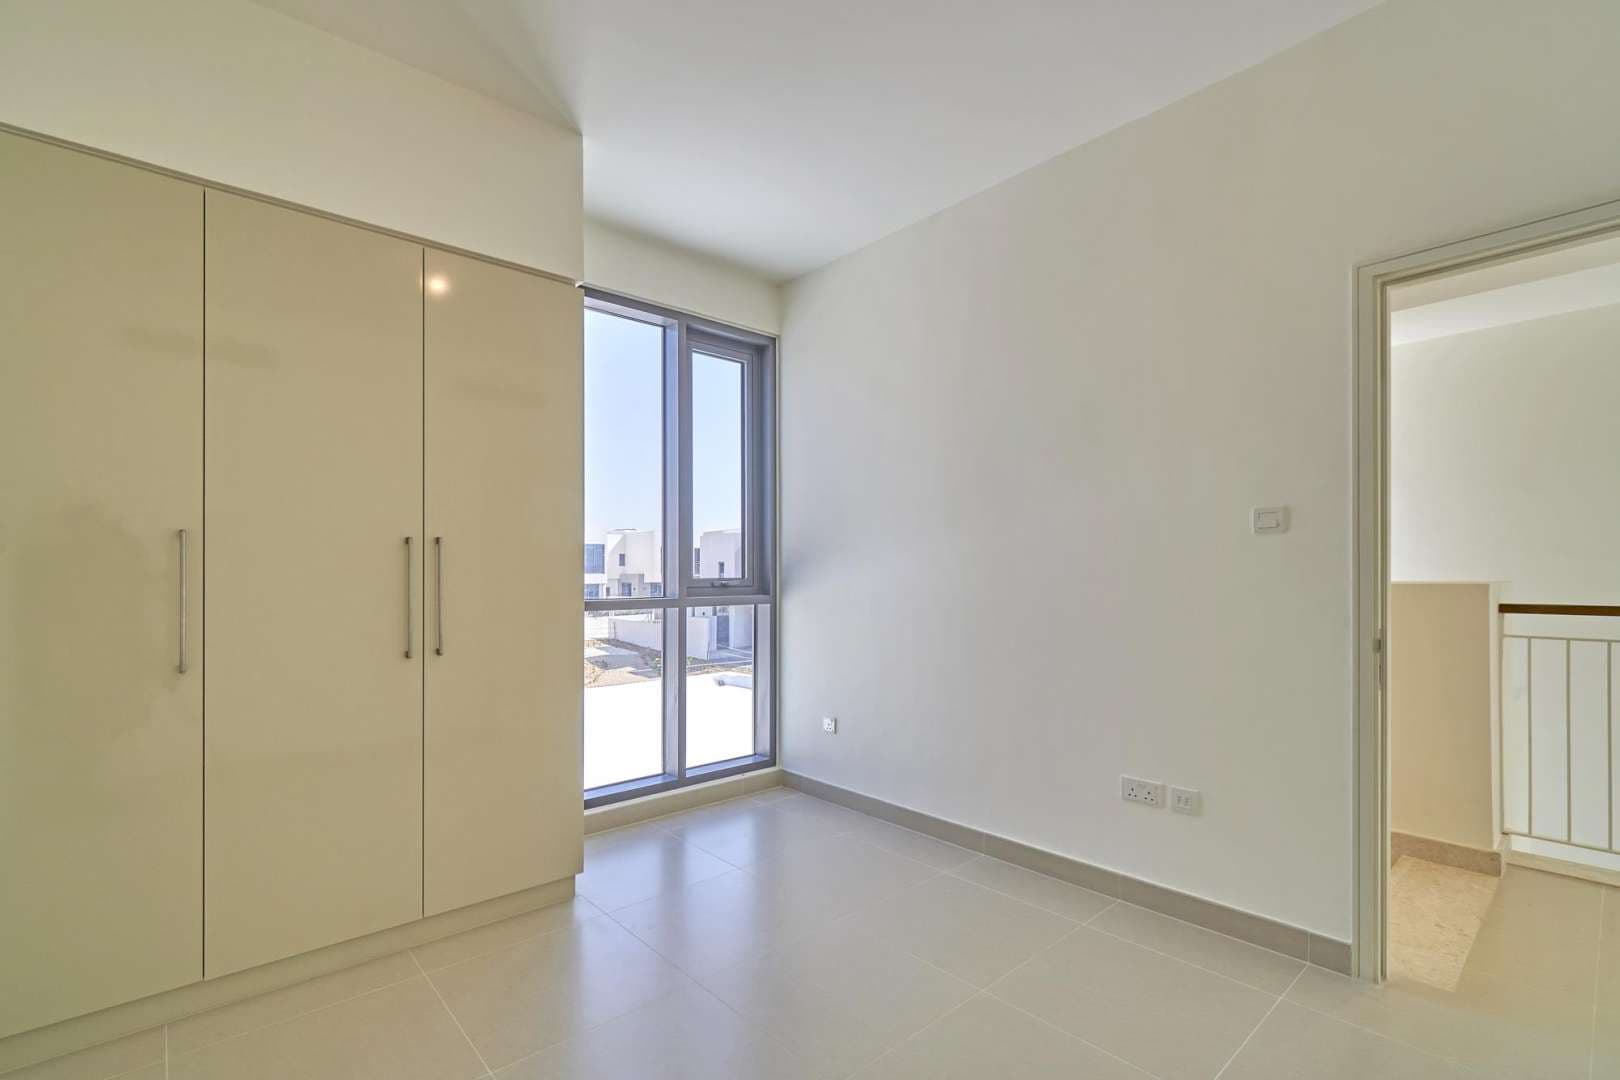 4 Bedroom Townhouse For Rent Maple At Dubai Hills Estate Lp06109 22ac3b6d34163c00.jpg